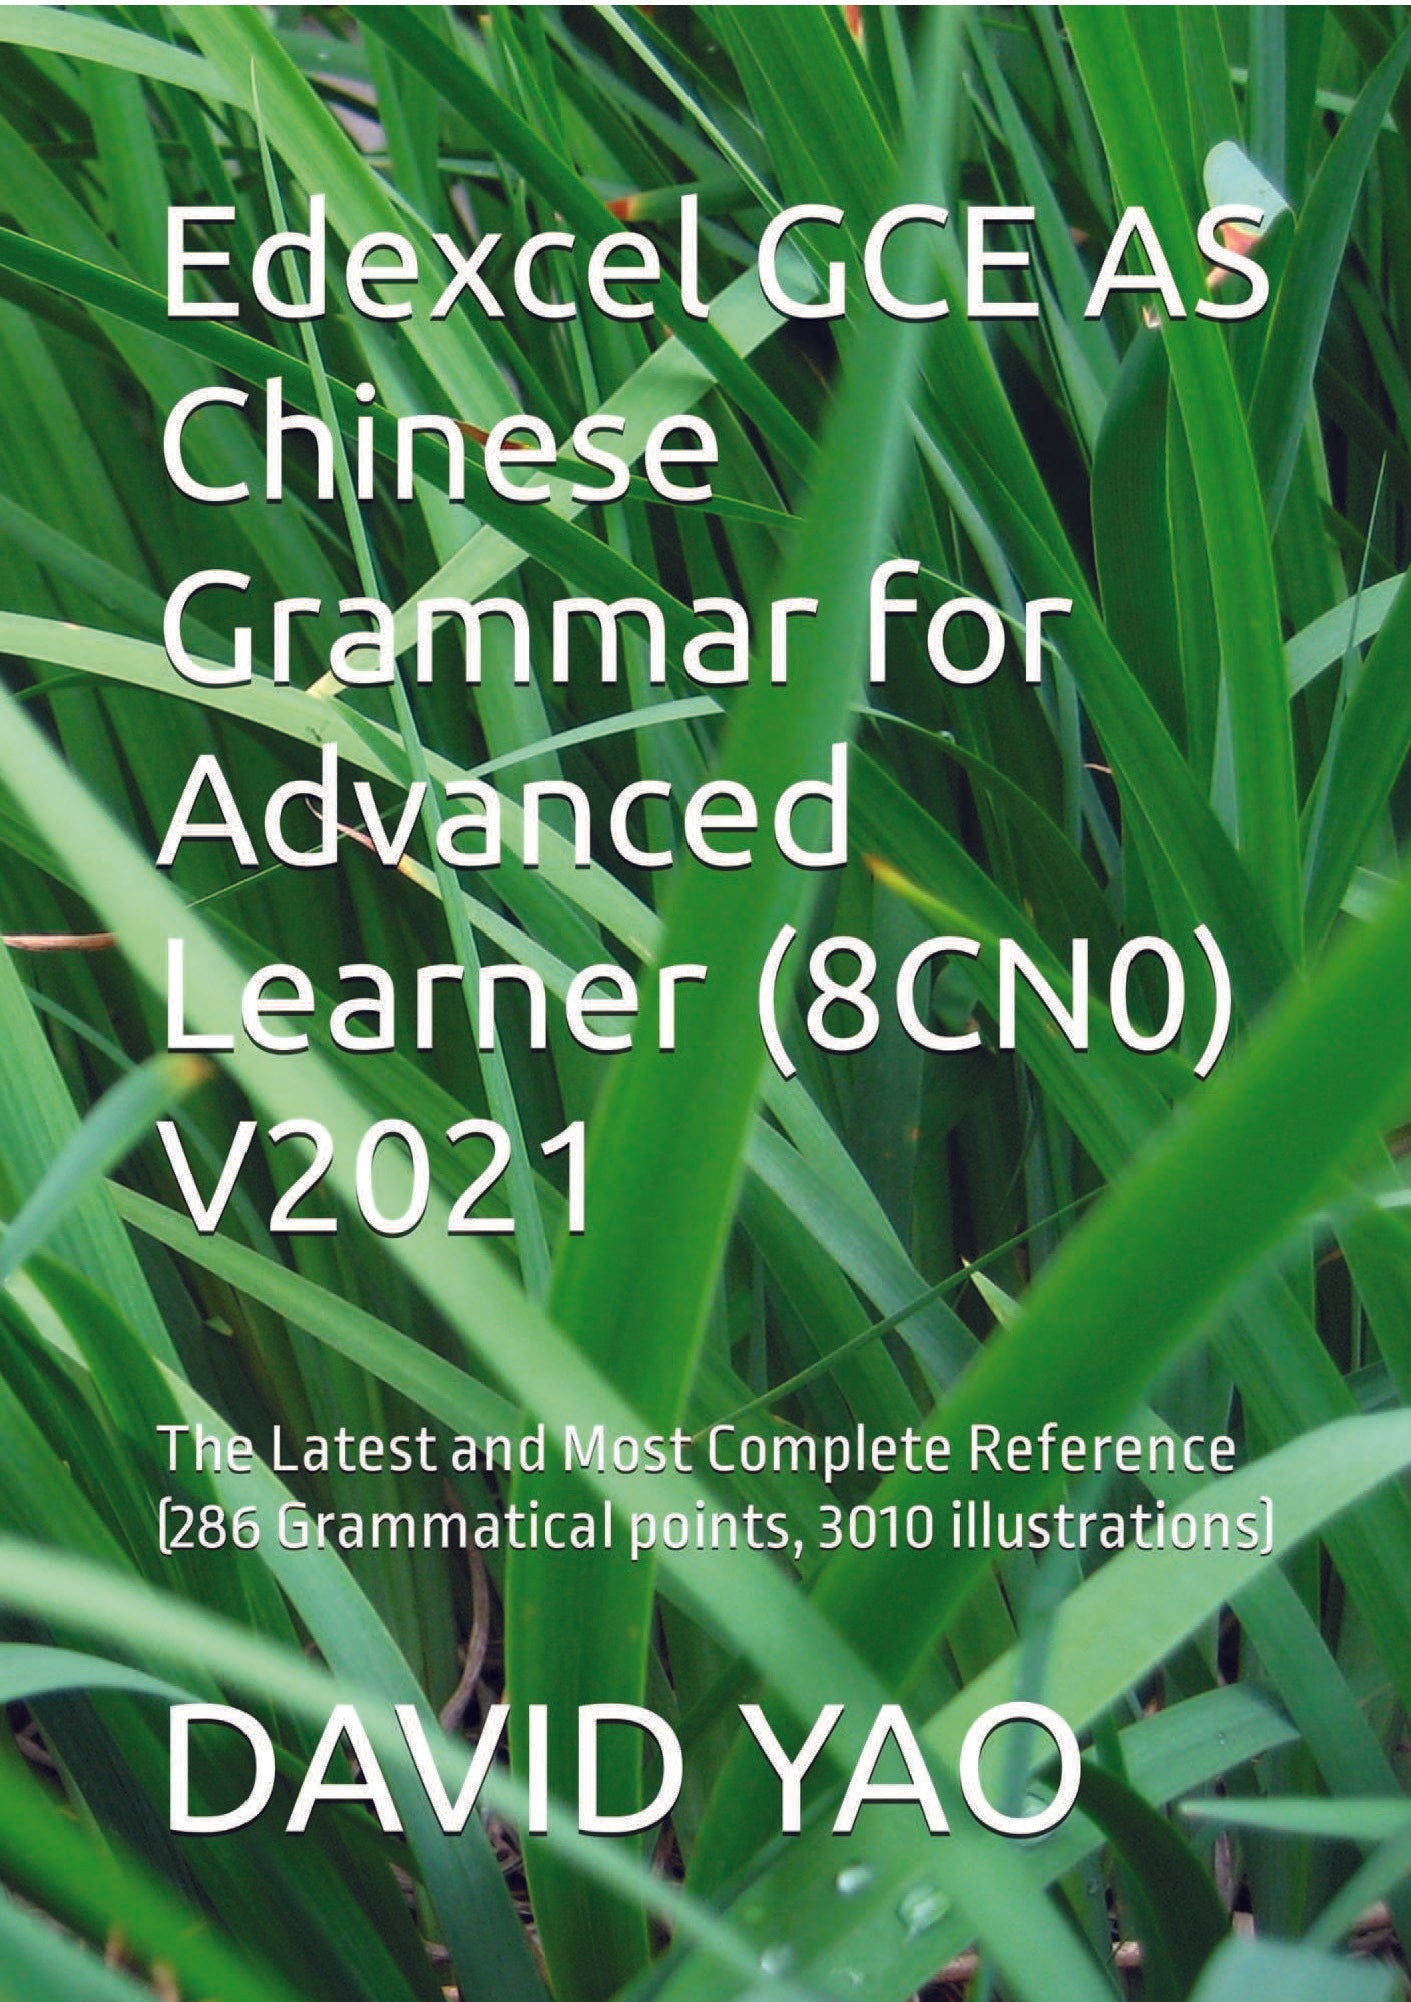 Edexcel GCE AS Chinese Grammar for Advanced Learner (8CN0) V2021